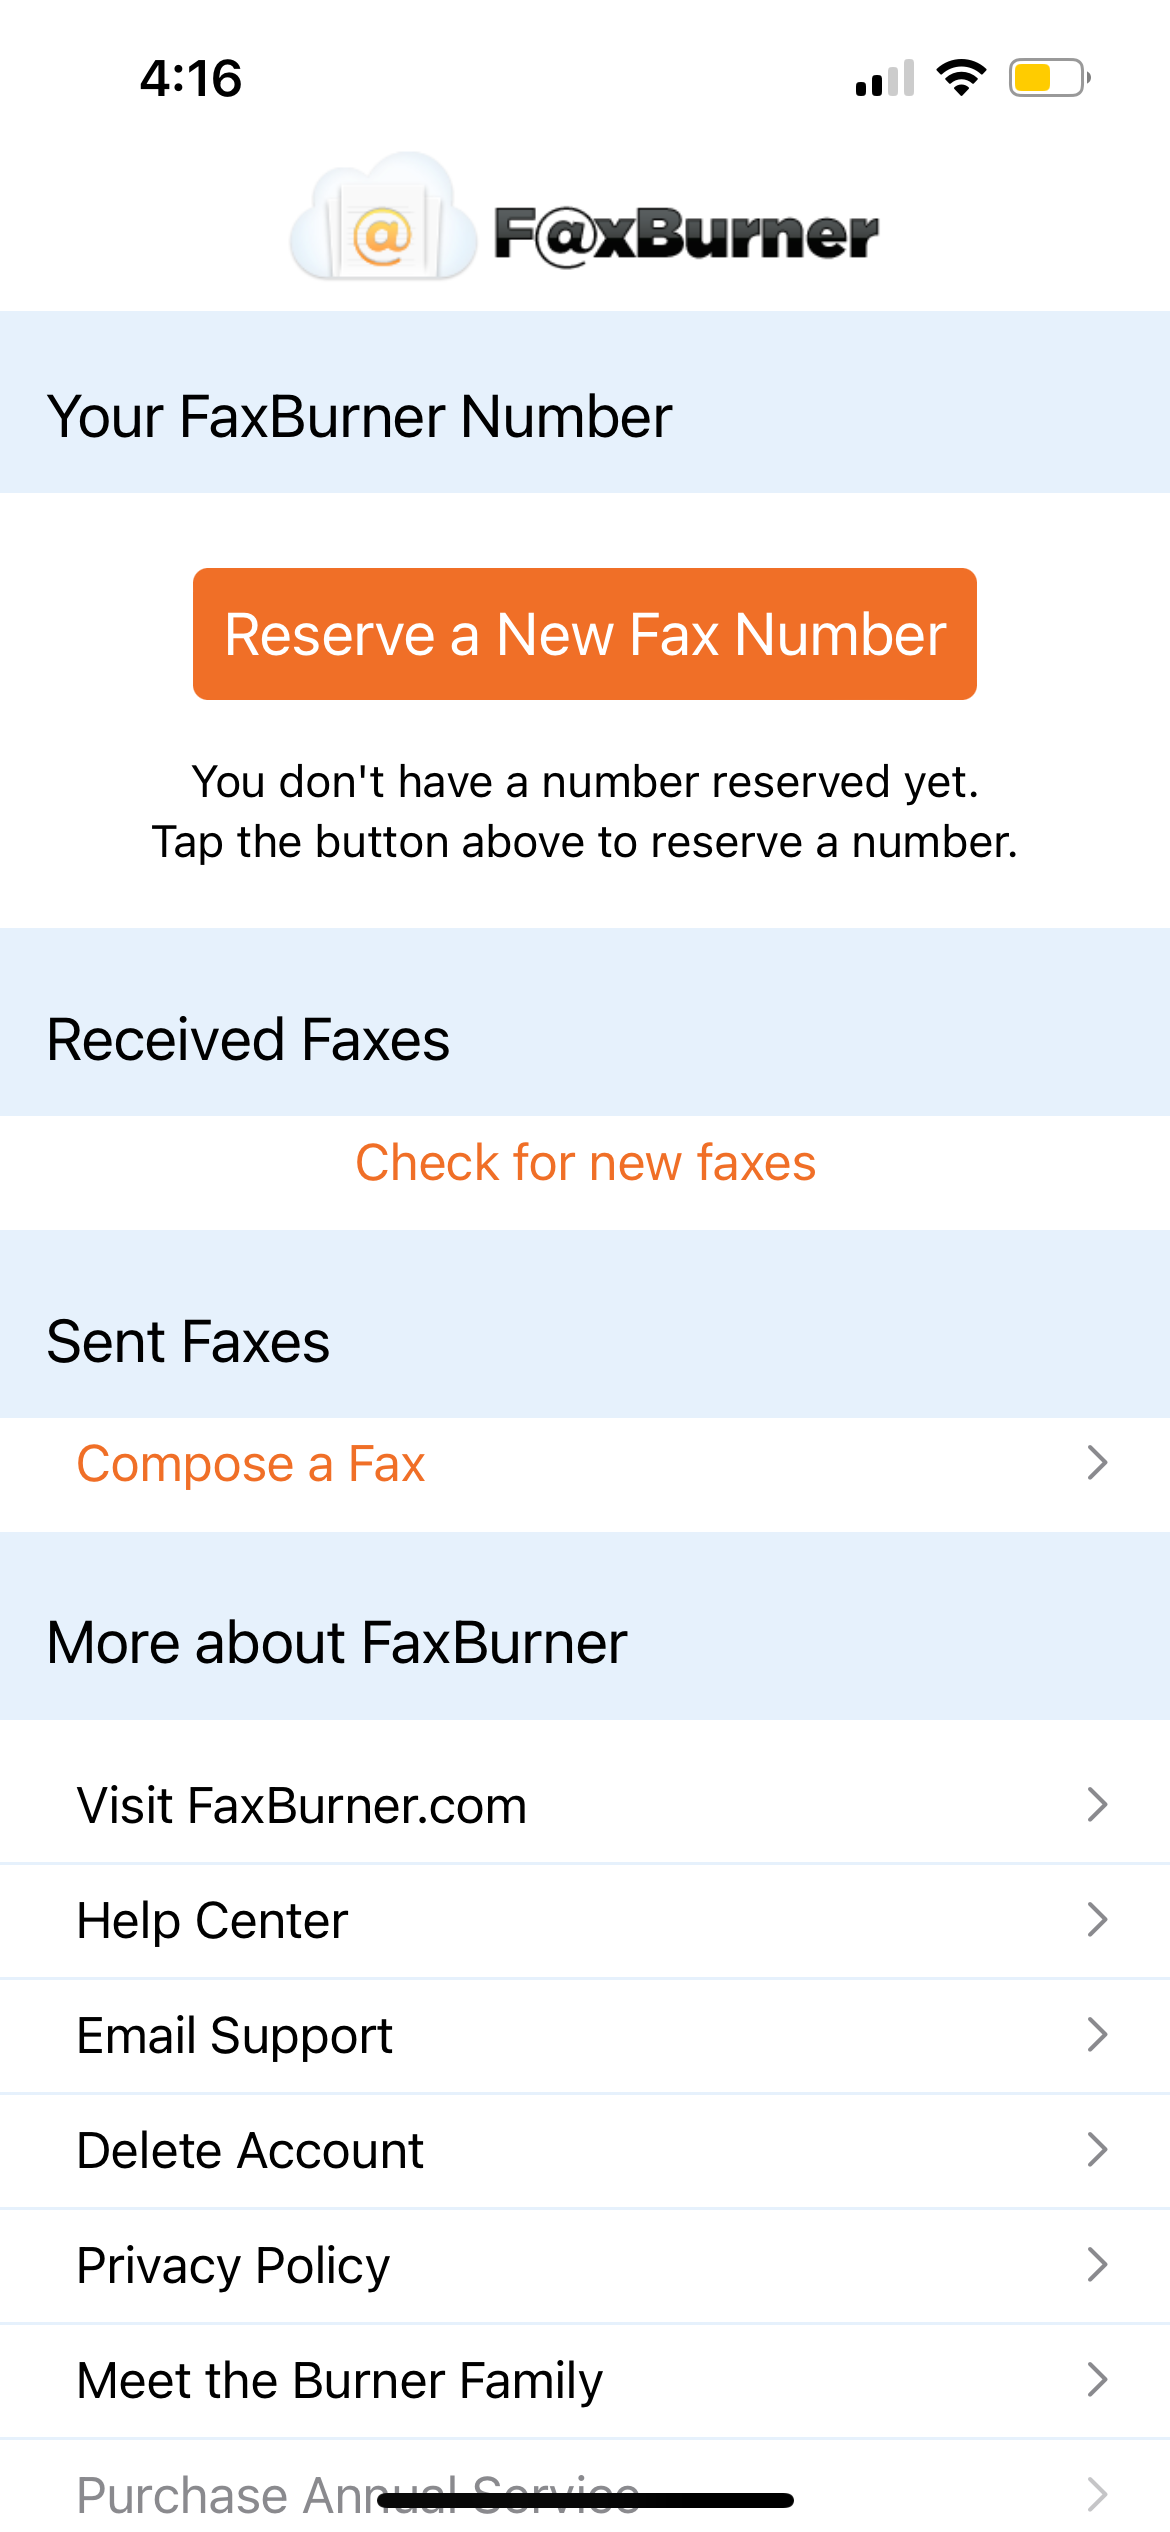 fax burner main page